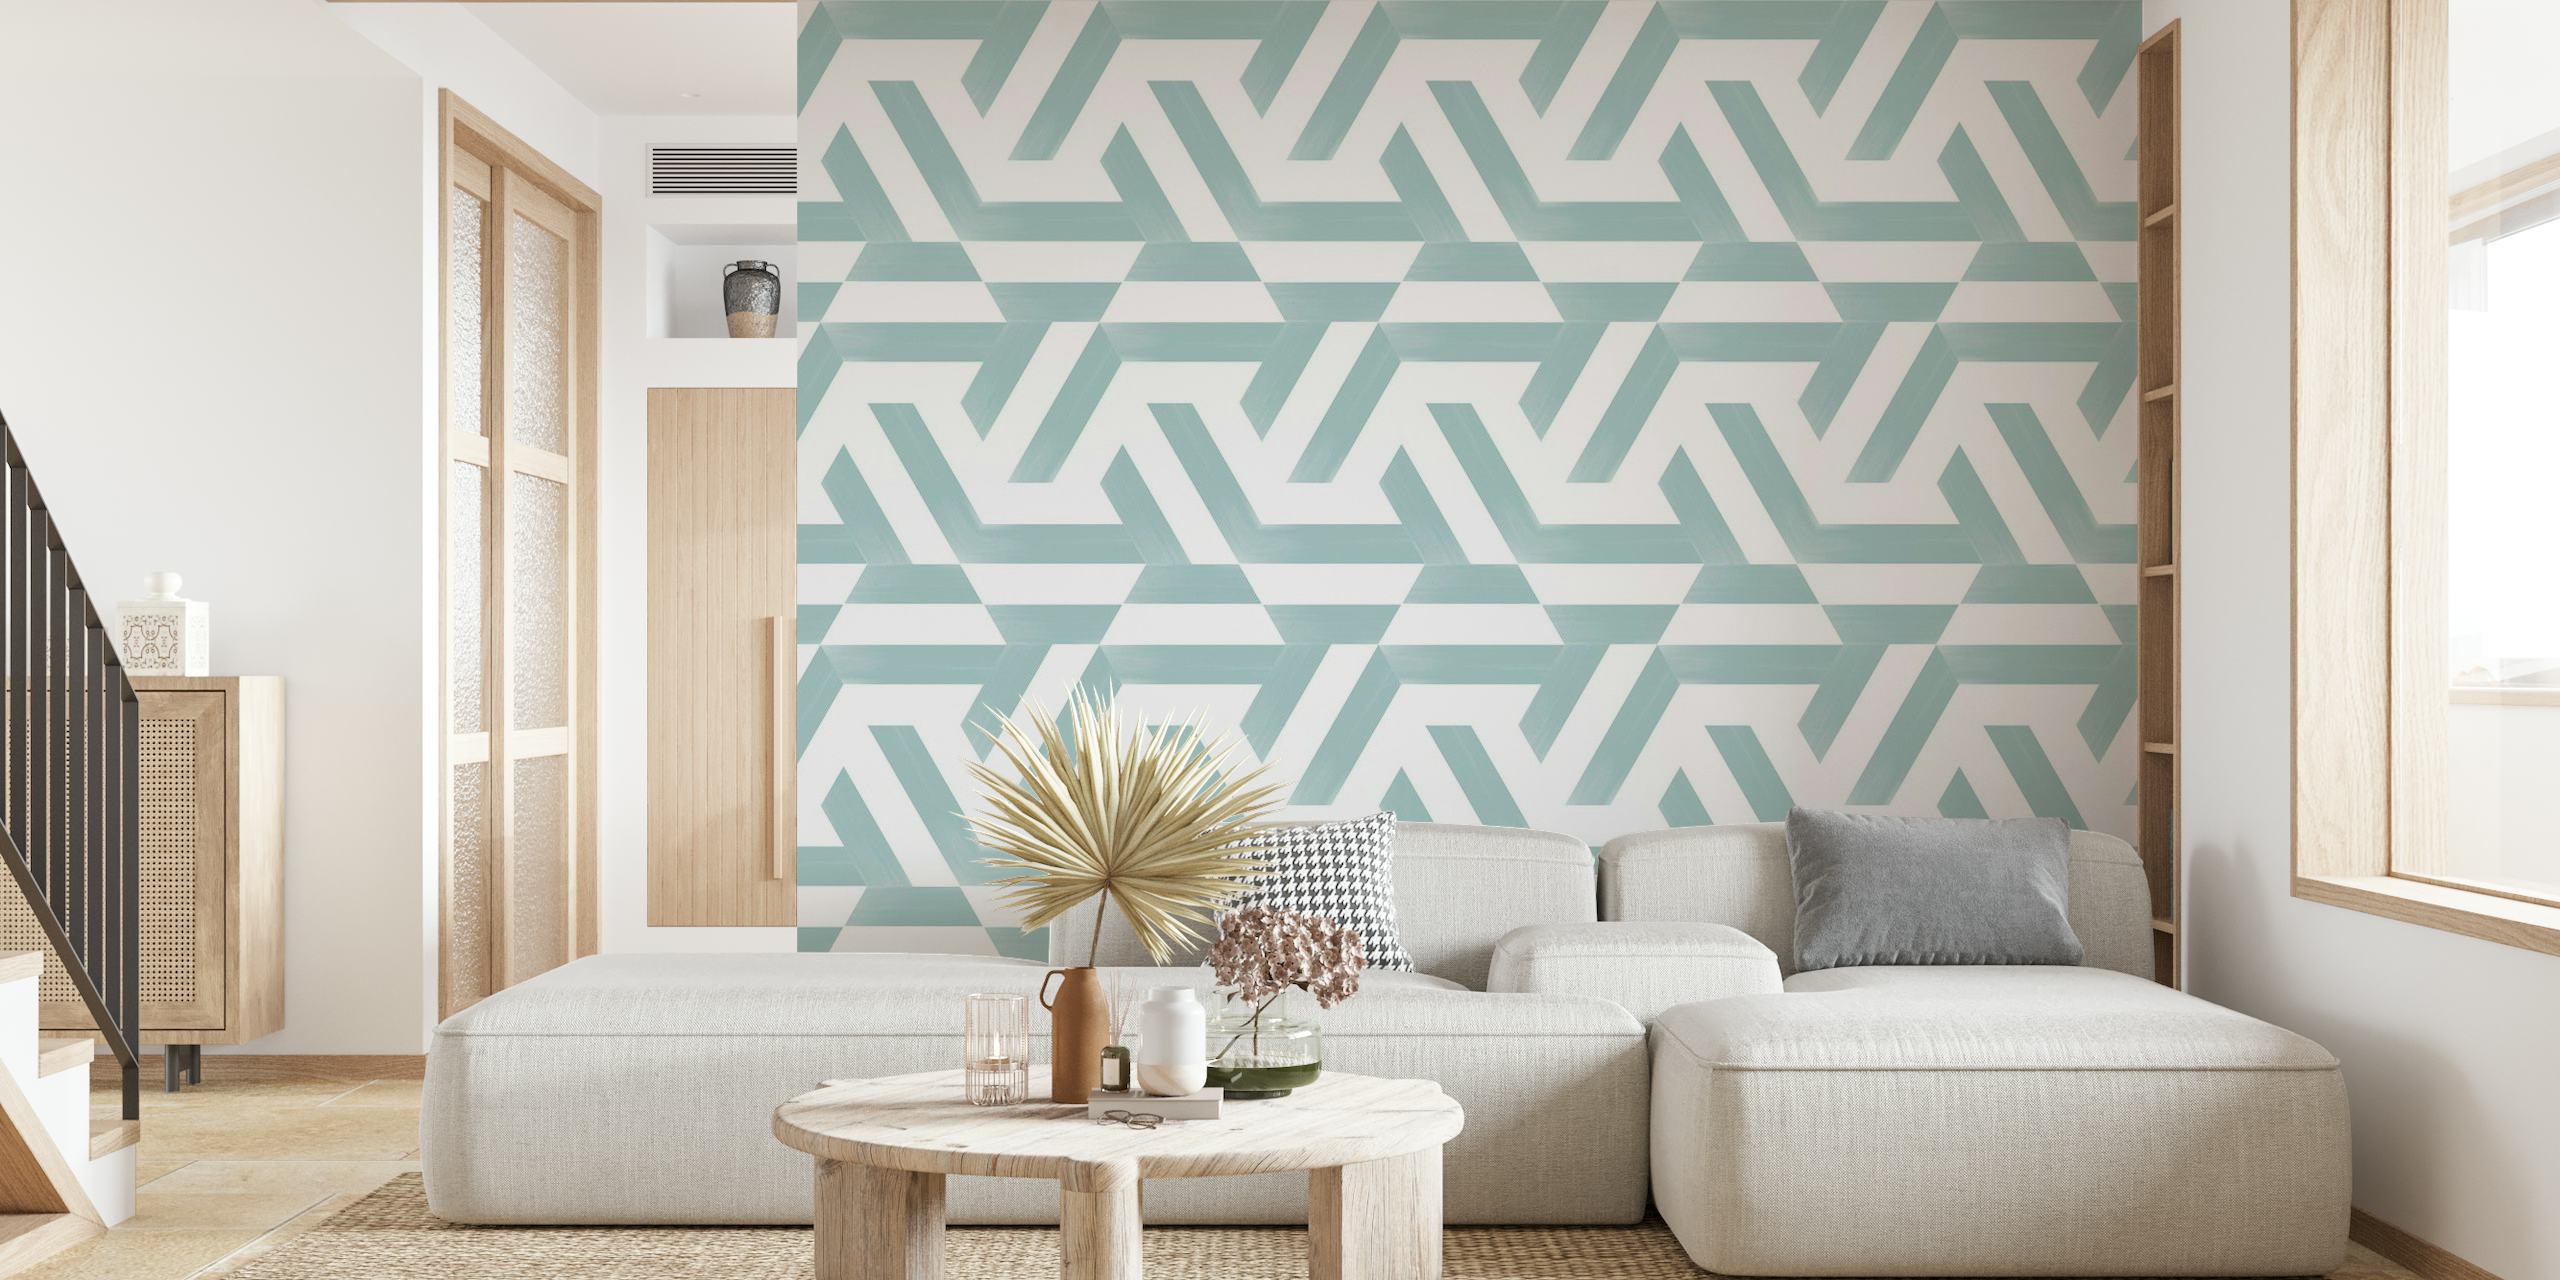 Playful Hexagon Pale Blue Grey Tiles Combo 1 wallpaper